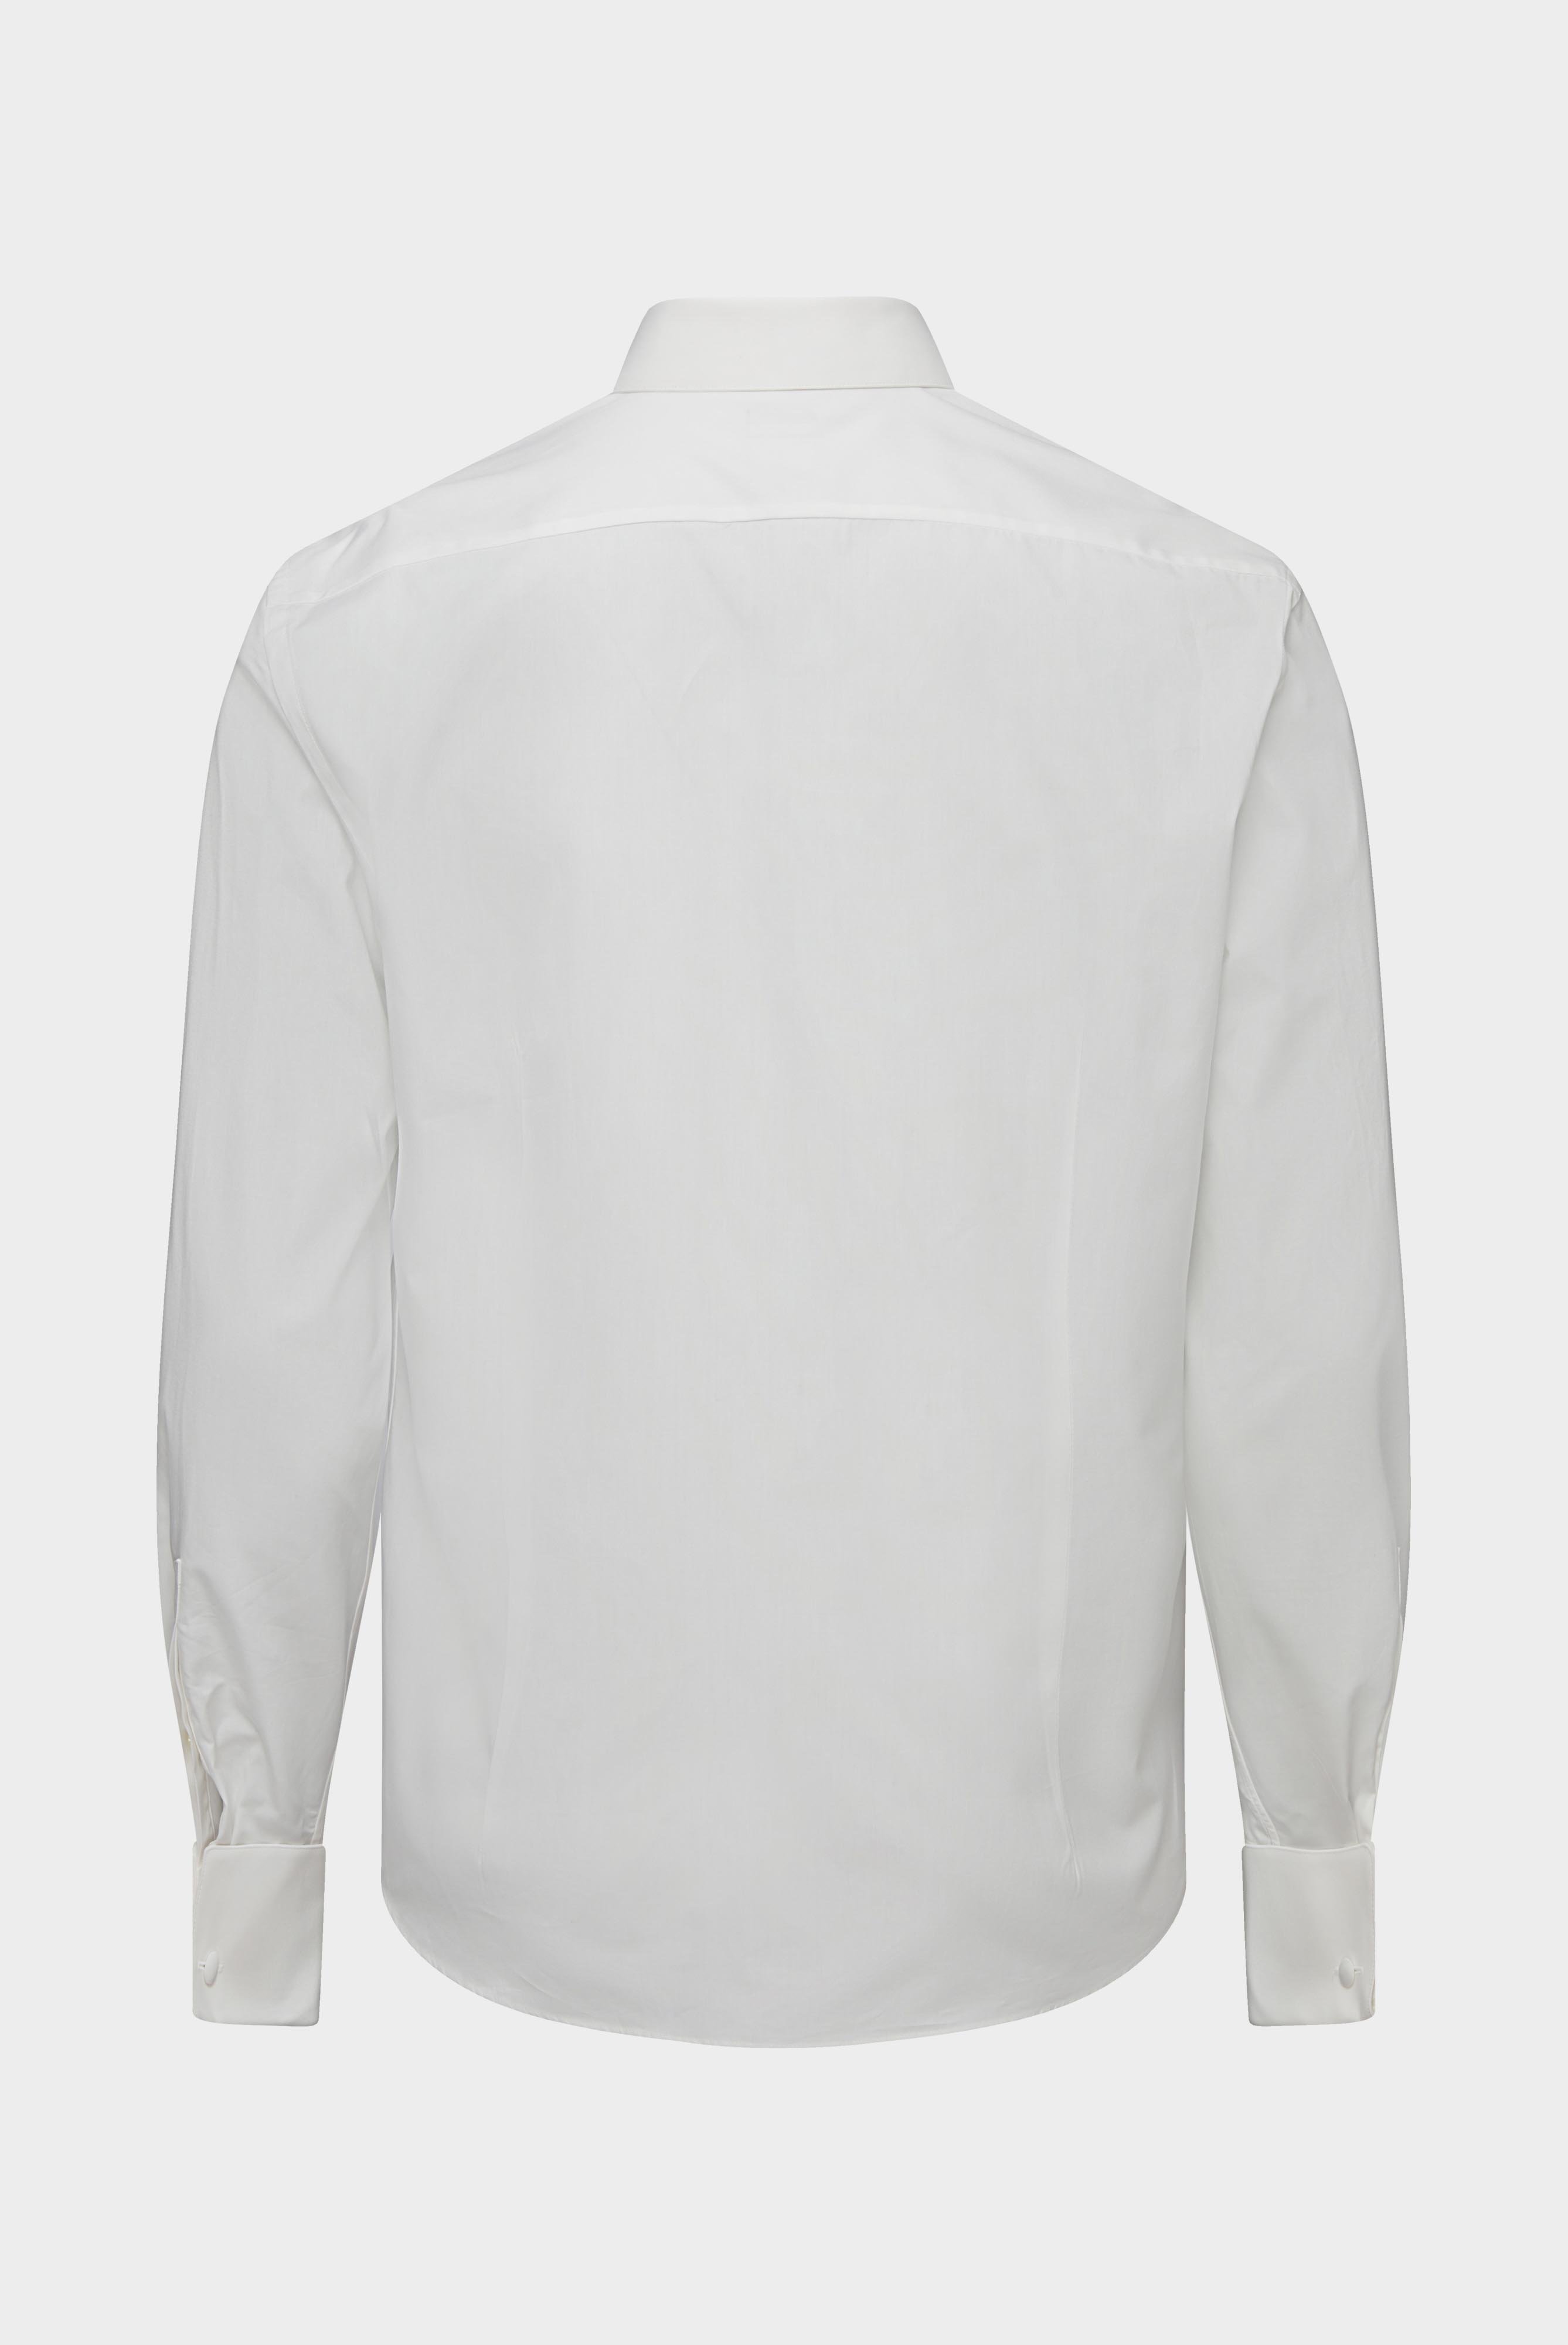 Festliche Hemden+Smokinghemd Slim Fit+20.2063.NV.130657.100.37